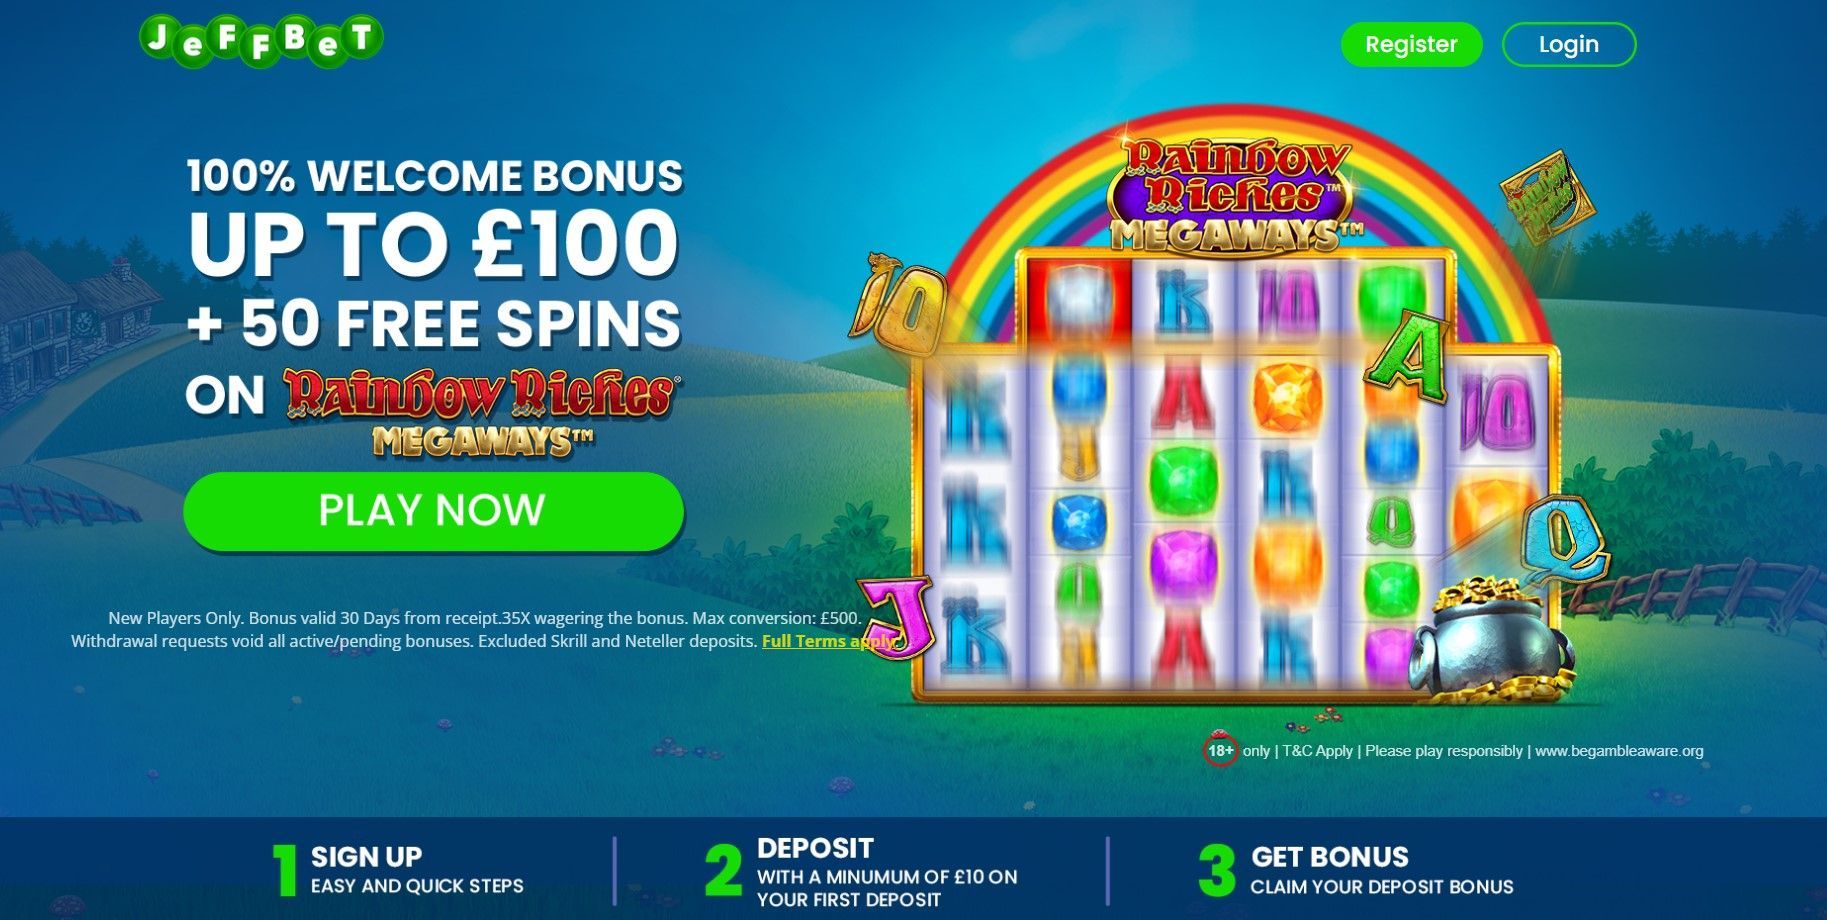 jeff bet mobile  online casino Offer from Go Gambling